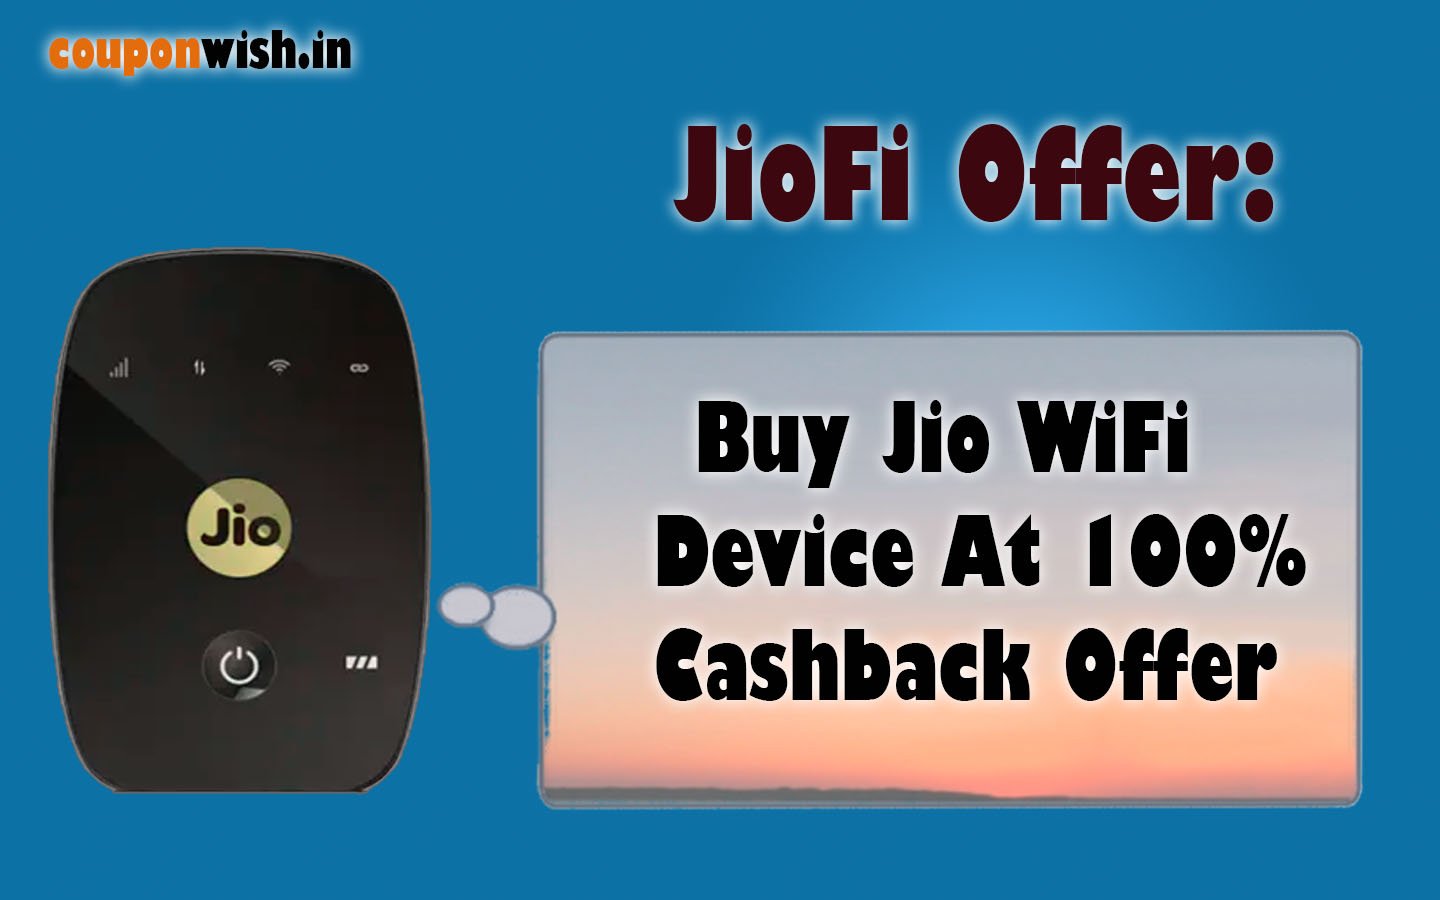 JioFi Offer: Buy Jio WiFi Device At 100% Cashback Offer